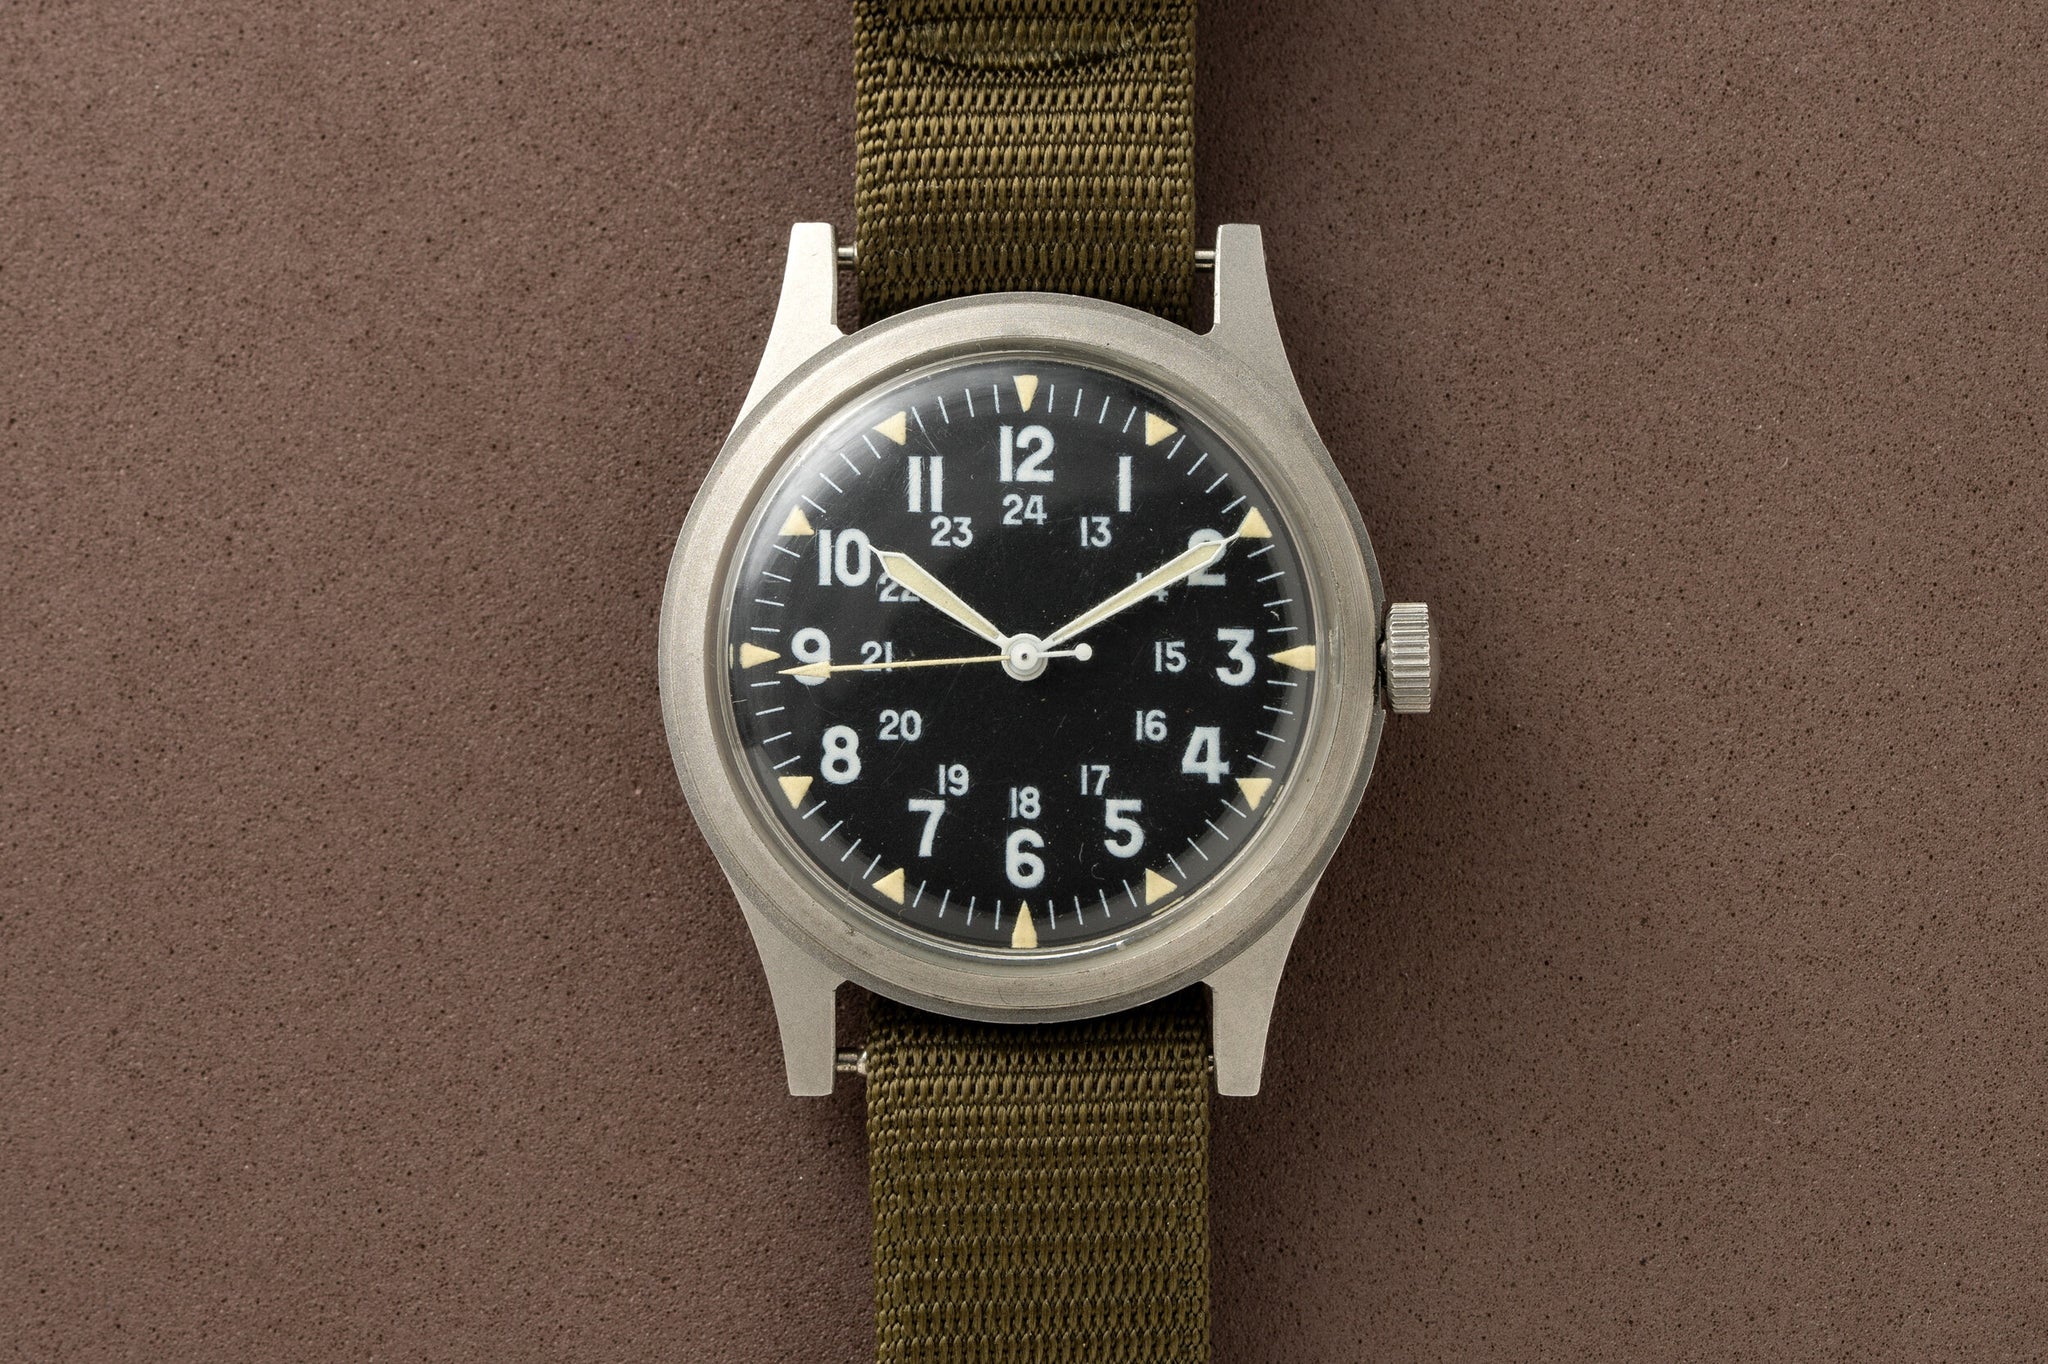 Benrus Military - GG-W-113 - 1969 